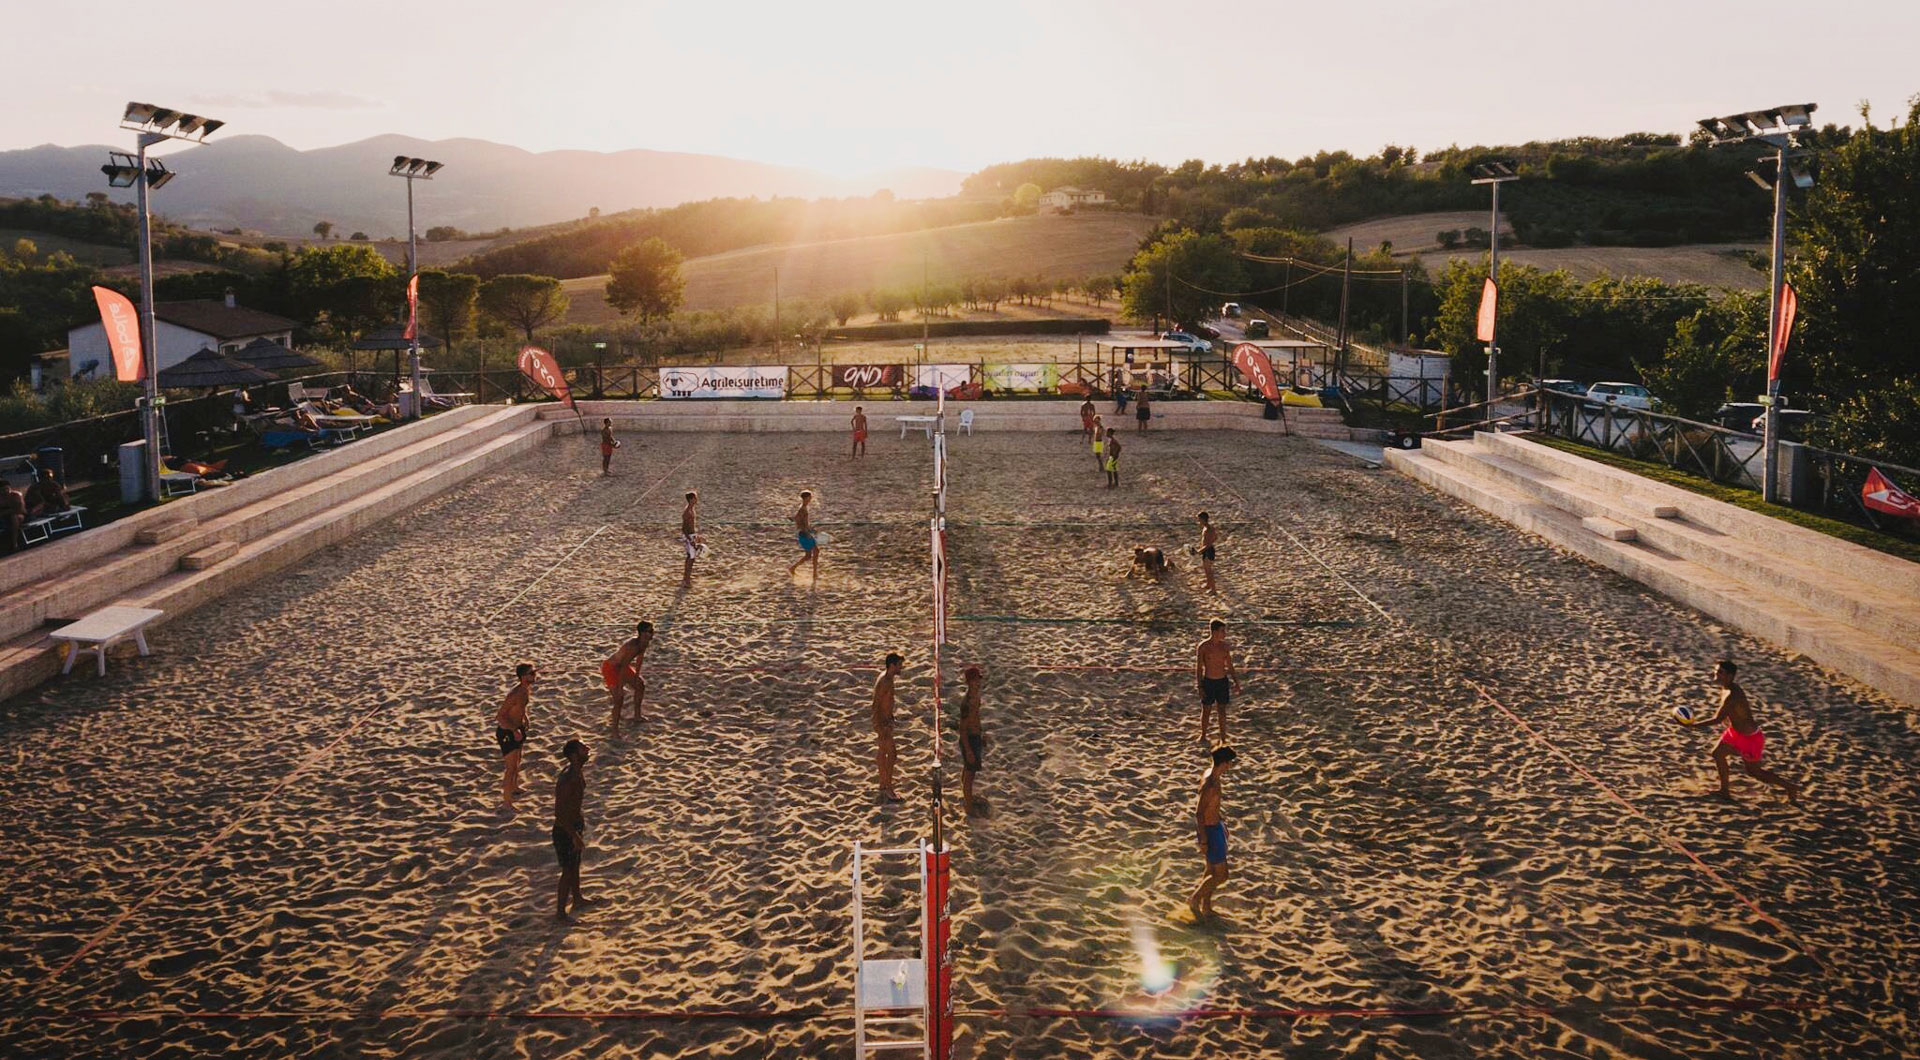 beach-volley